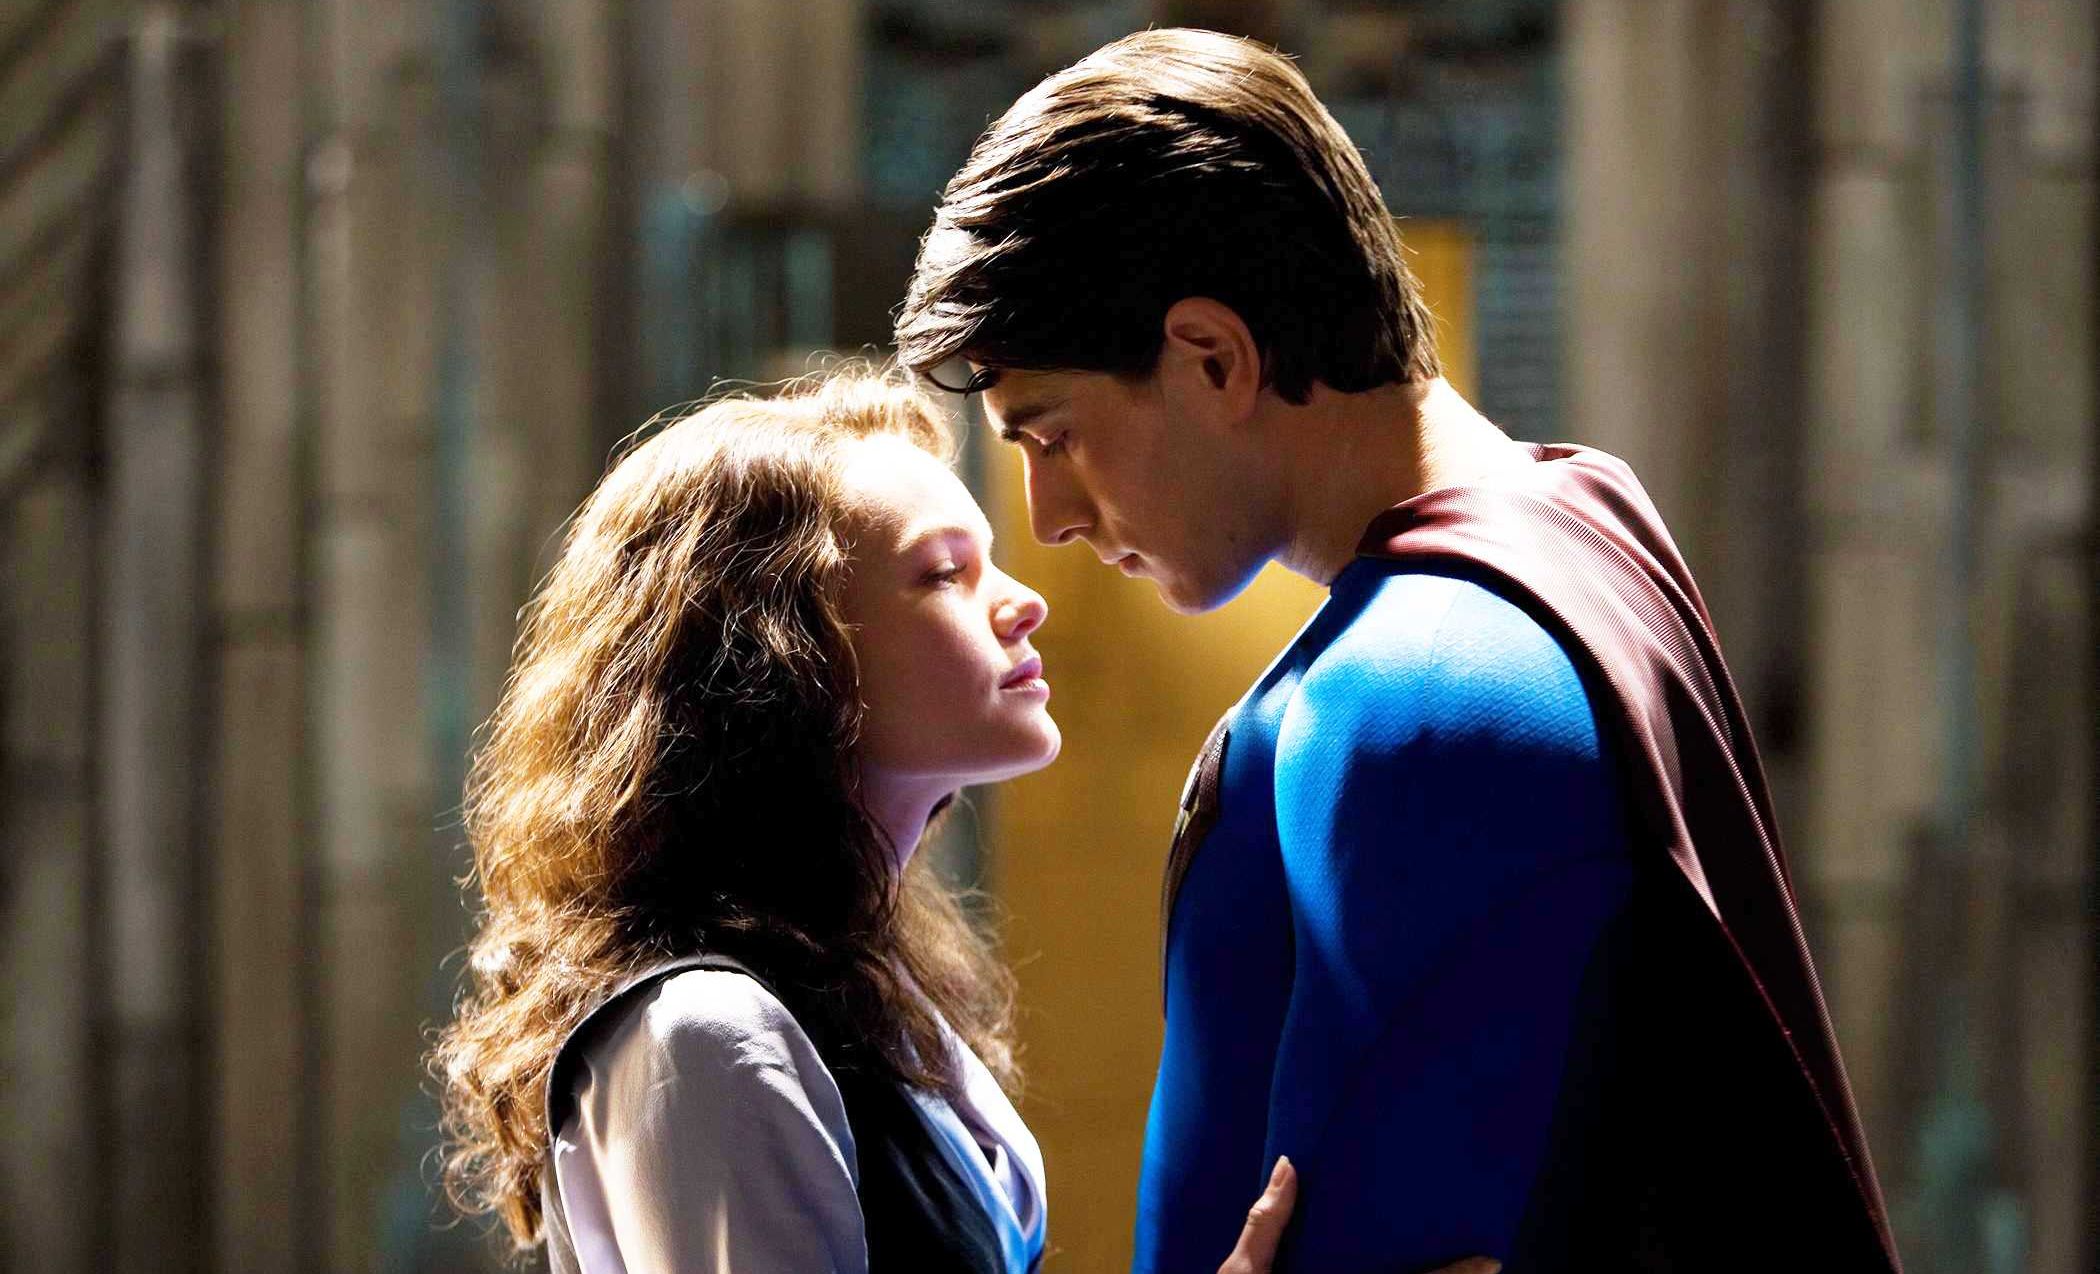 4. Superman Returns (2006)